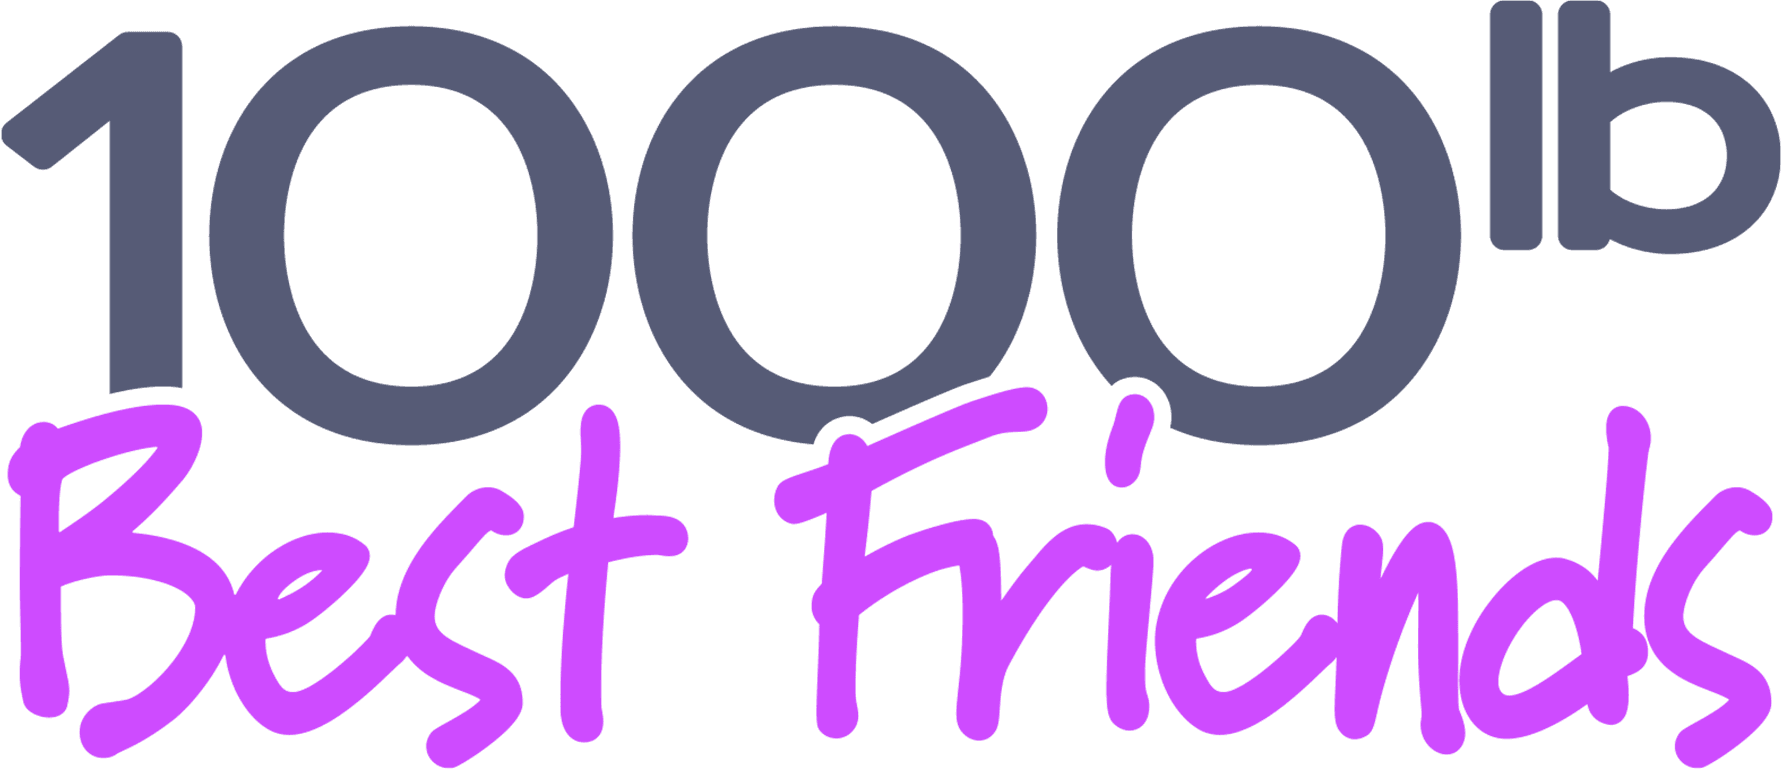 1000-lb Best Friends logo